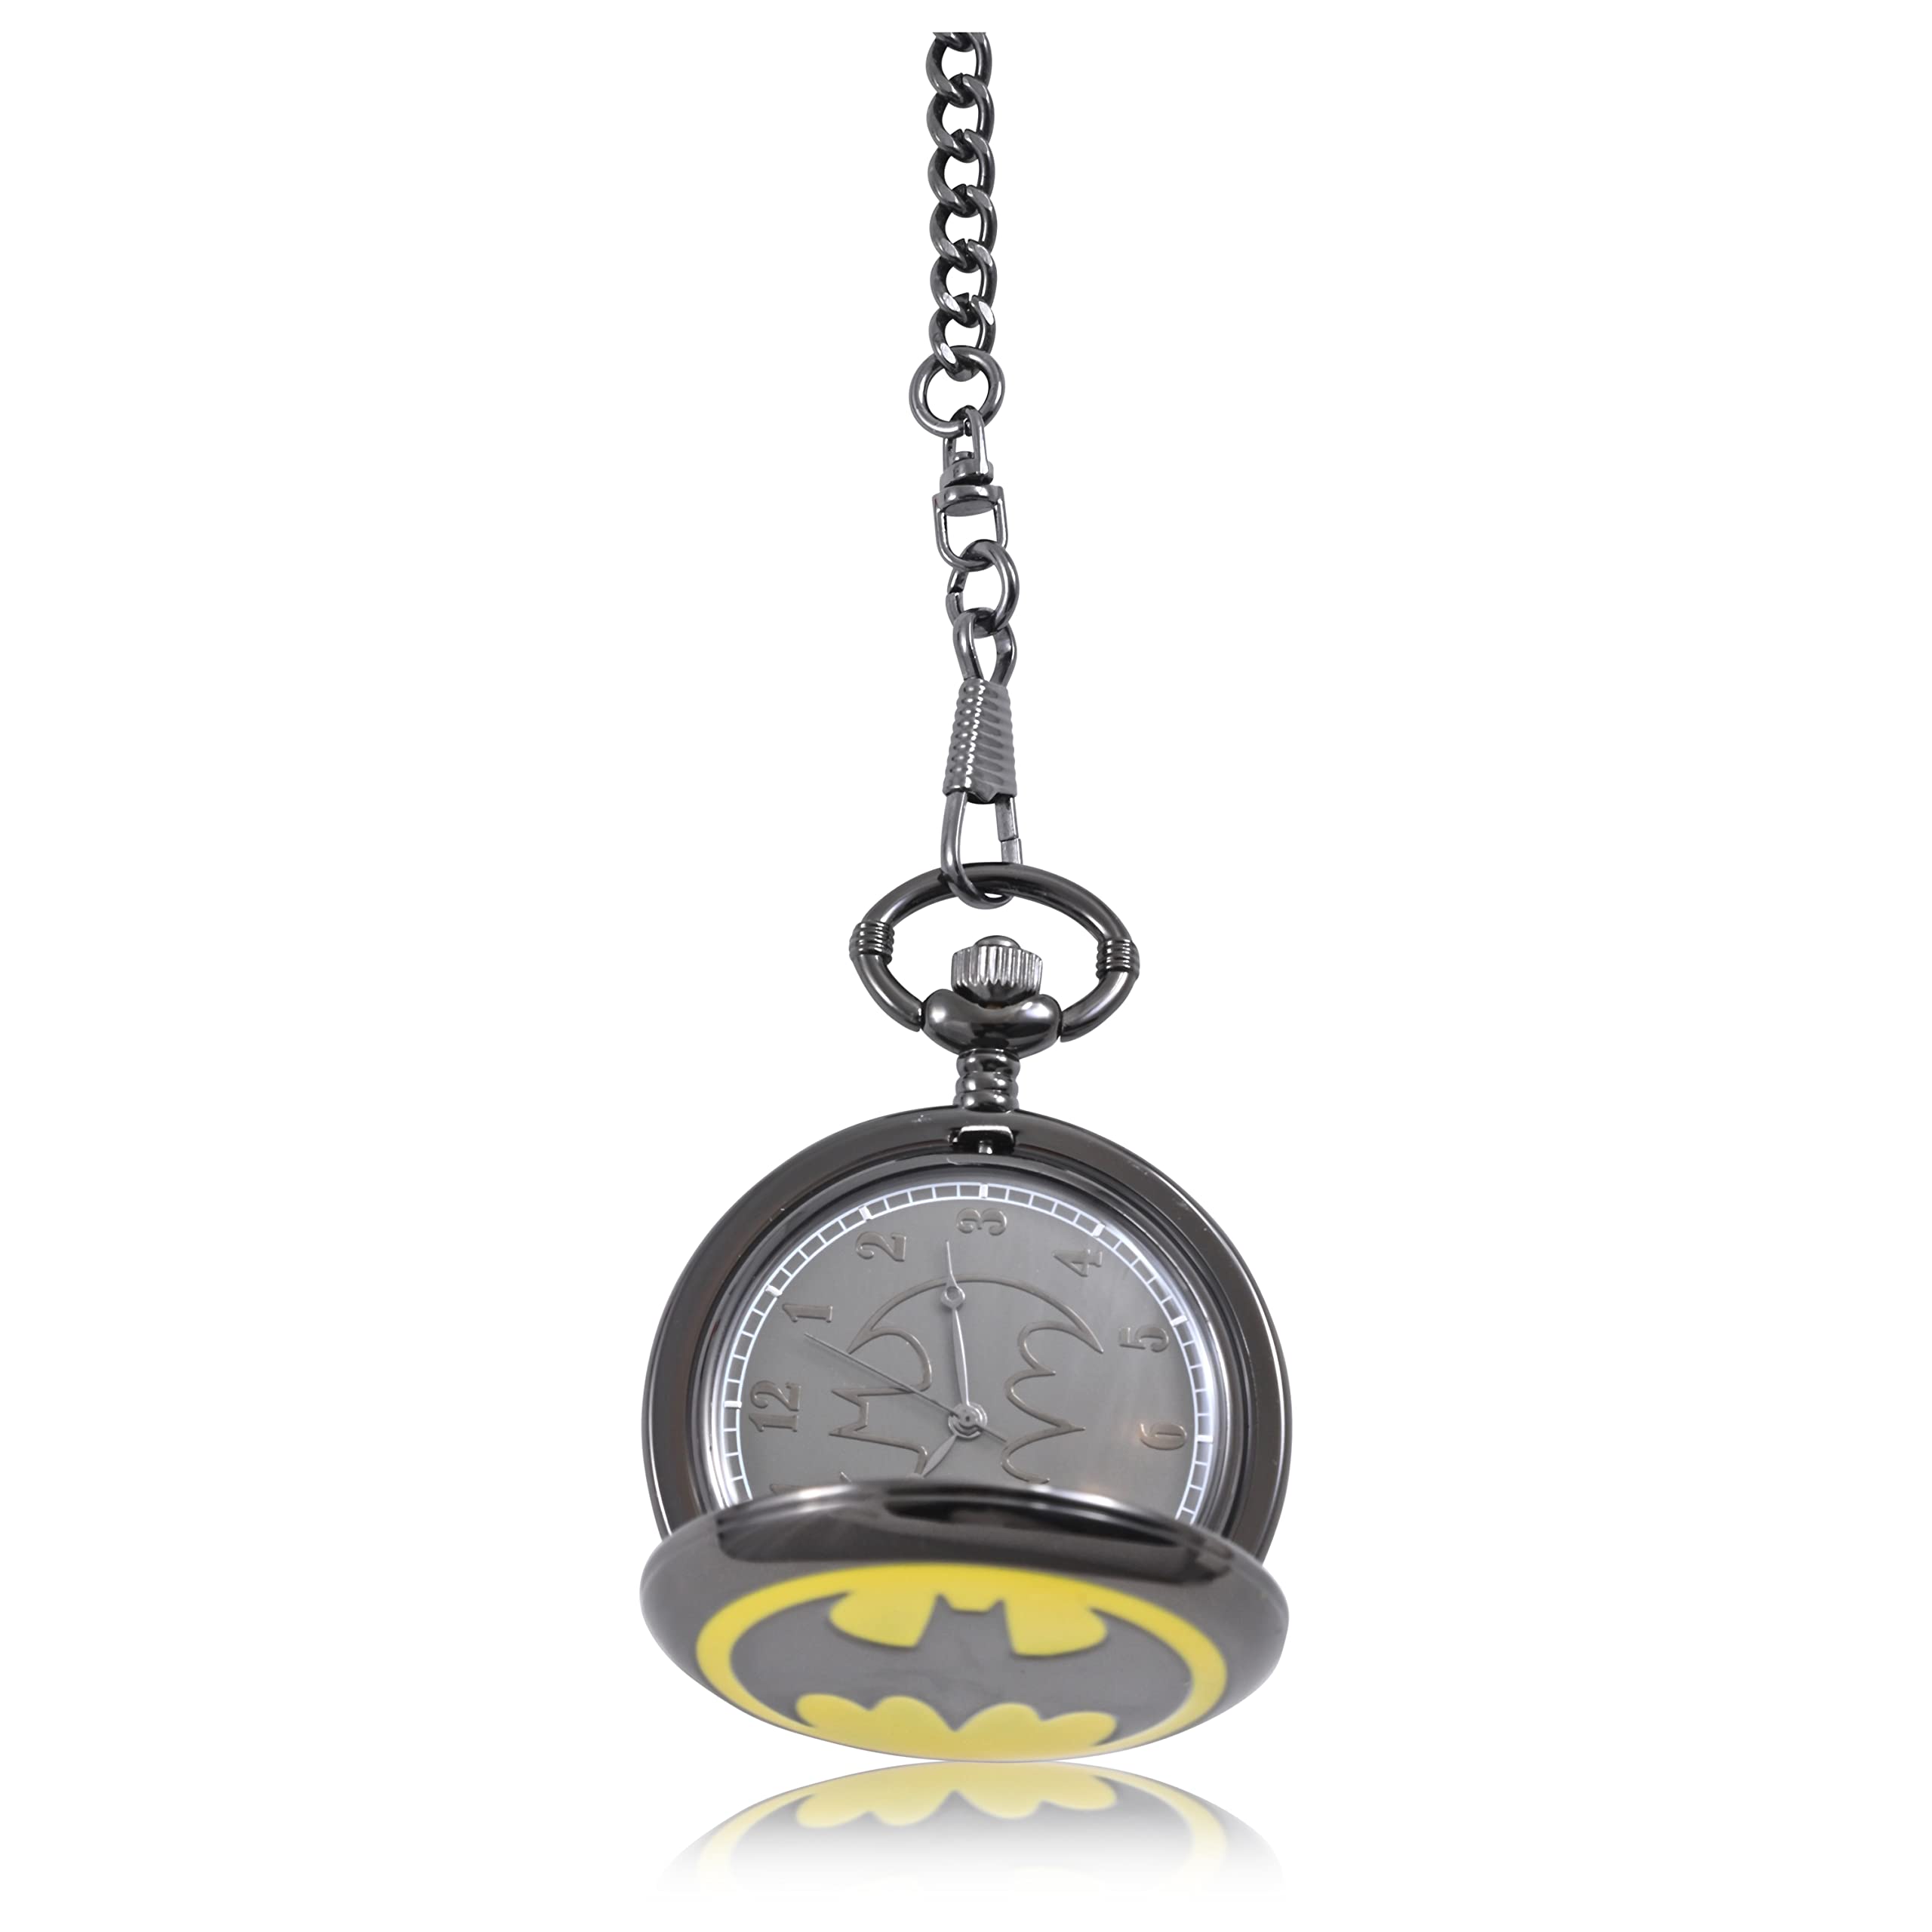 Accutime DC Comics Batman Adult Men's Analog Pocket Watch - Emblem Molded Shield Cover, Male, Analog Wrist Watch in Silver (Model: BAT3093AZ)